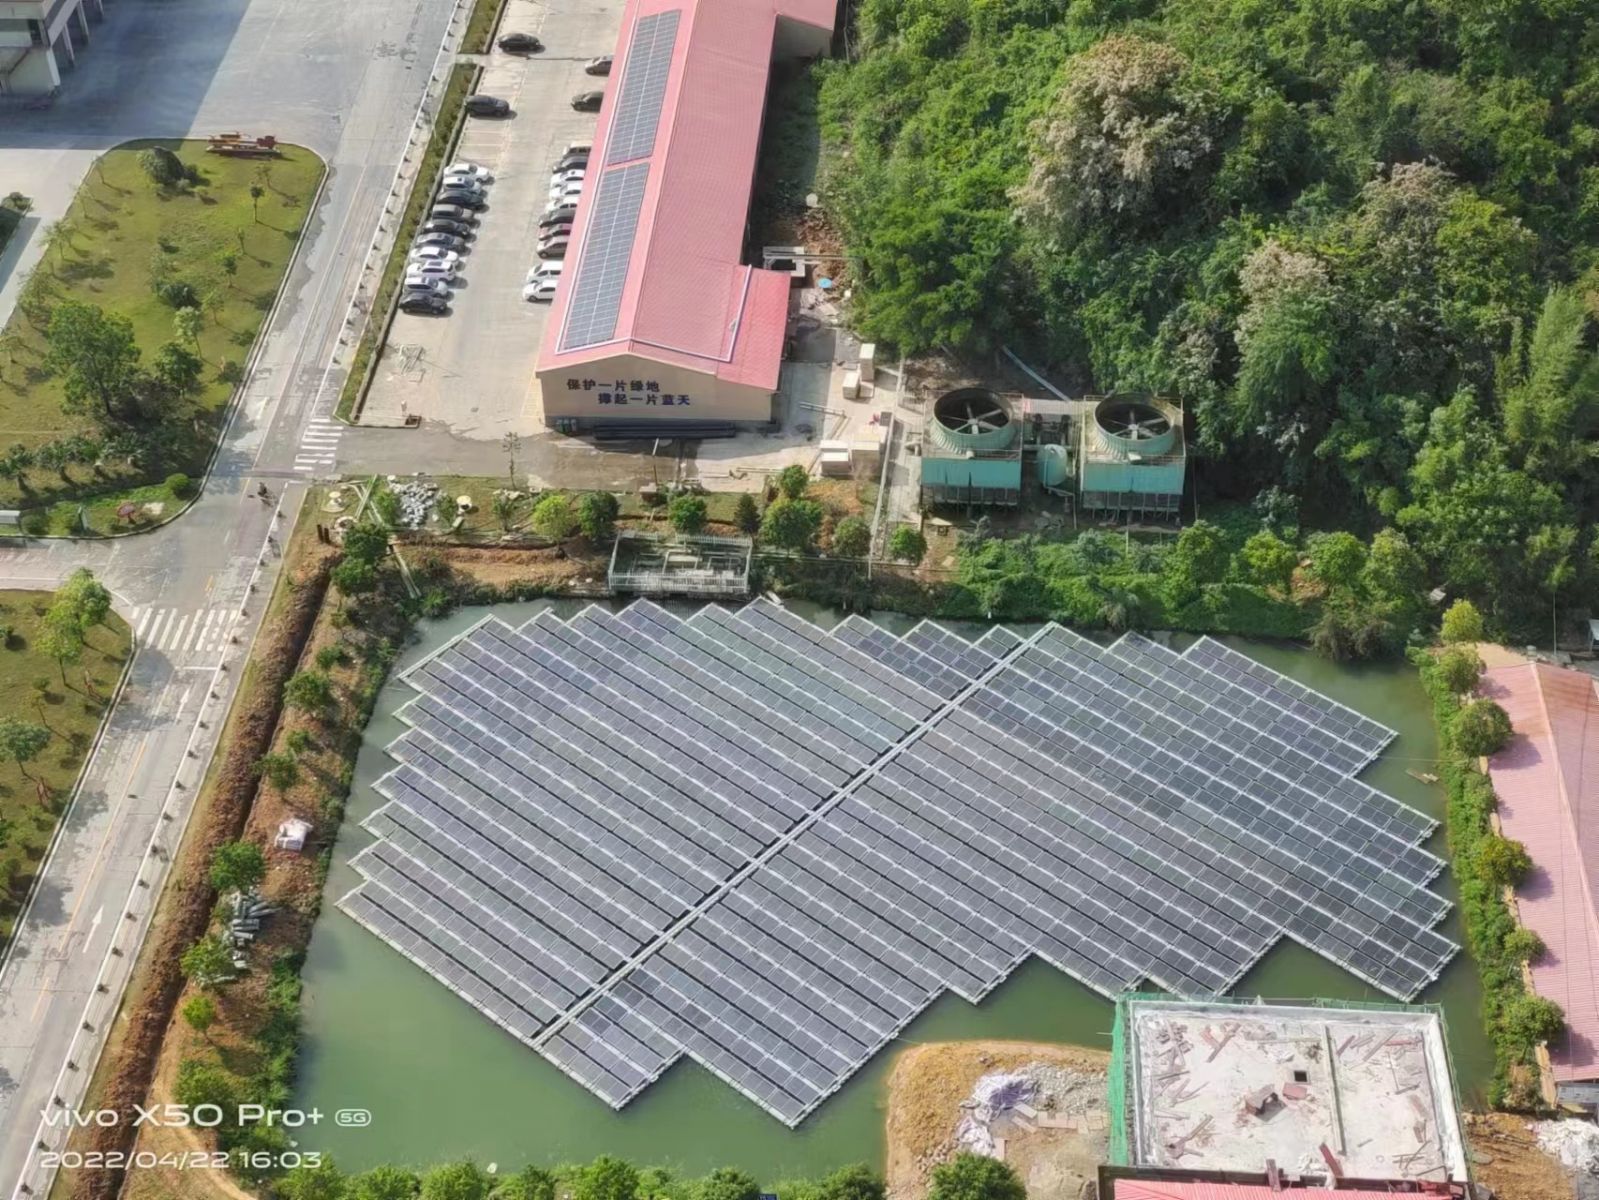 Floating Solar Project in Zanjiang Guangdong China- 1MW